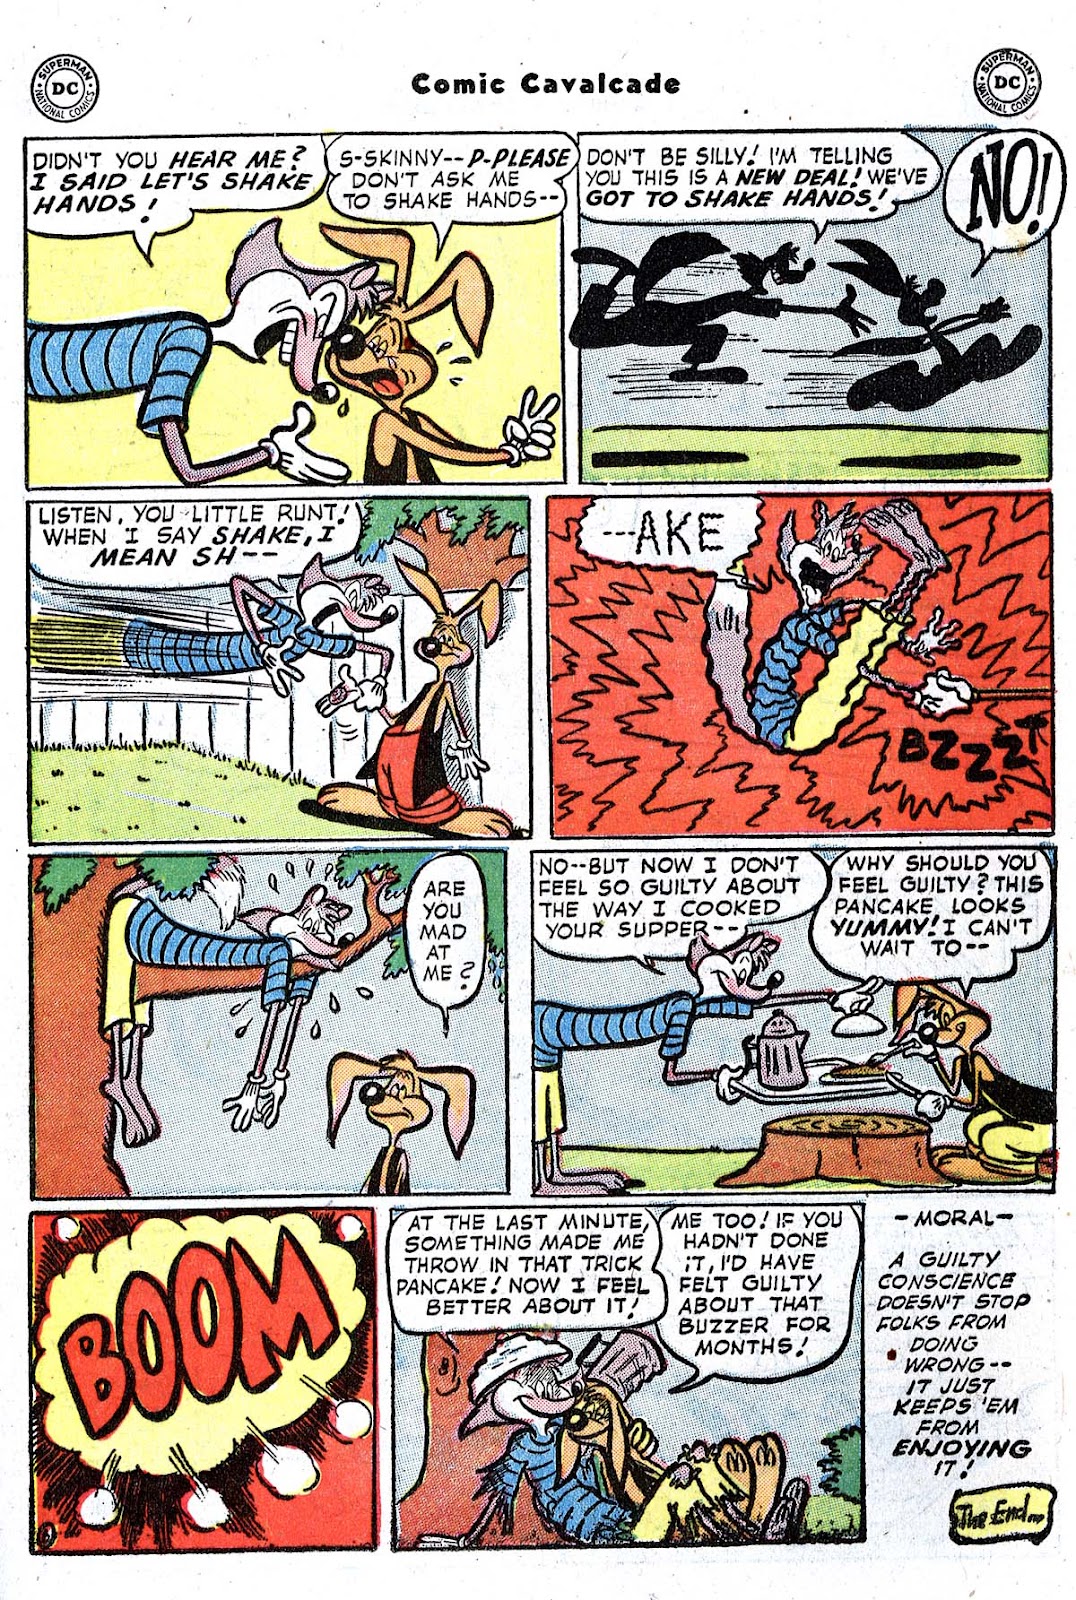 Comic Cavalcade issue 58 - Page 47